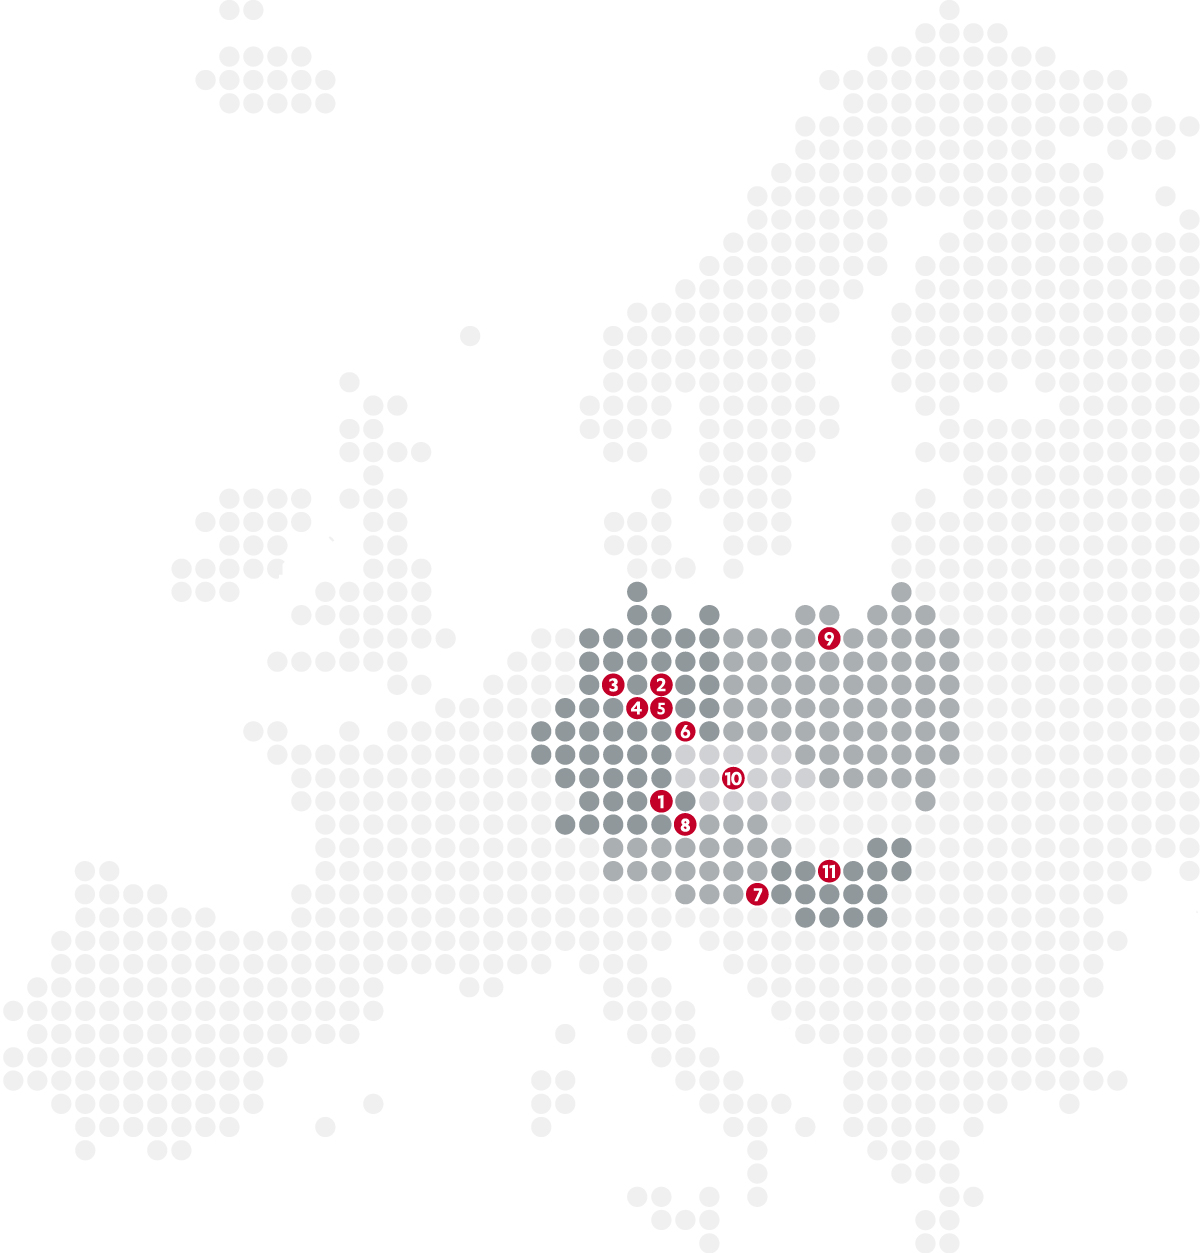 HÖRMANN Intralofgistics – Standorte Map